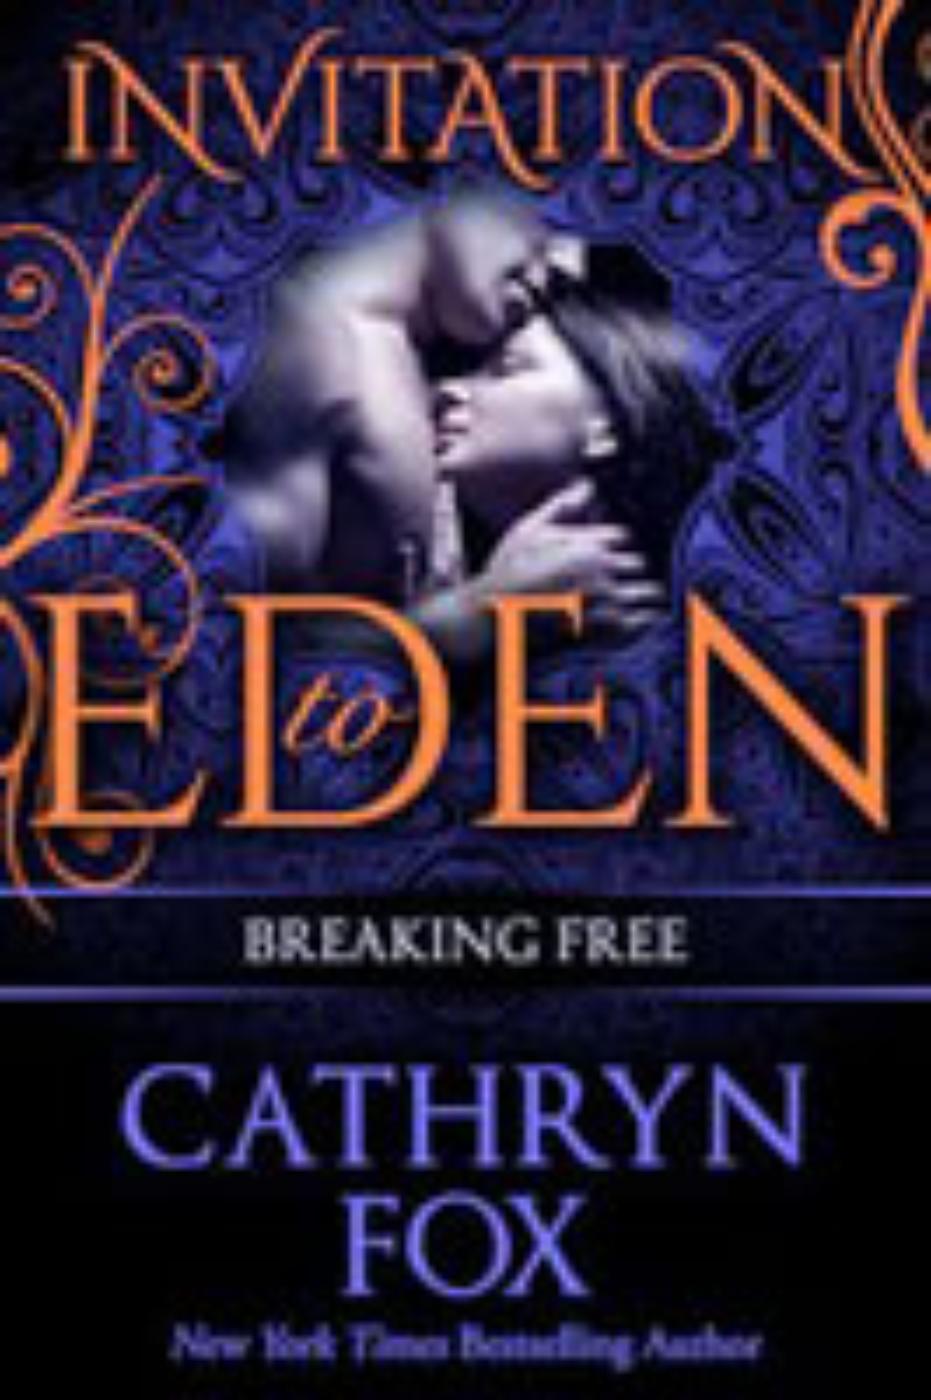 Breaking Free (Invitation to Eden) (2014) by Cathryn Fox